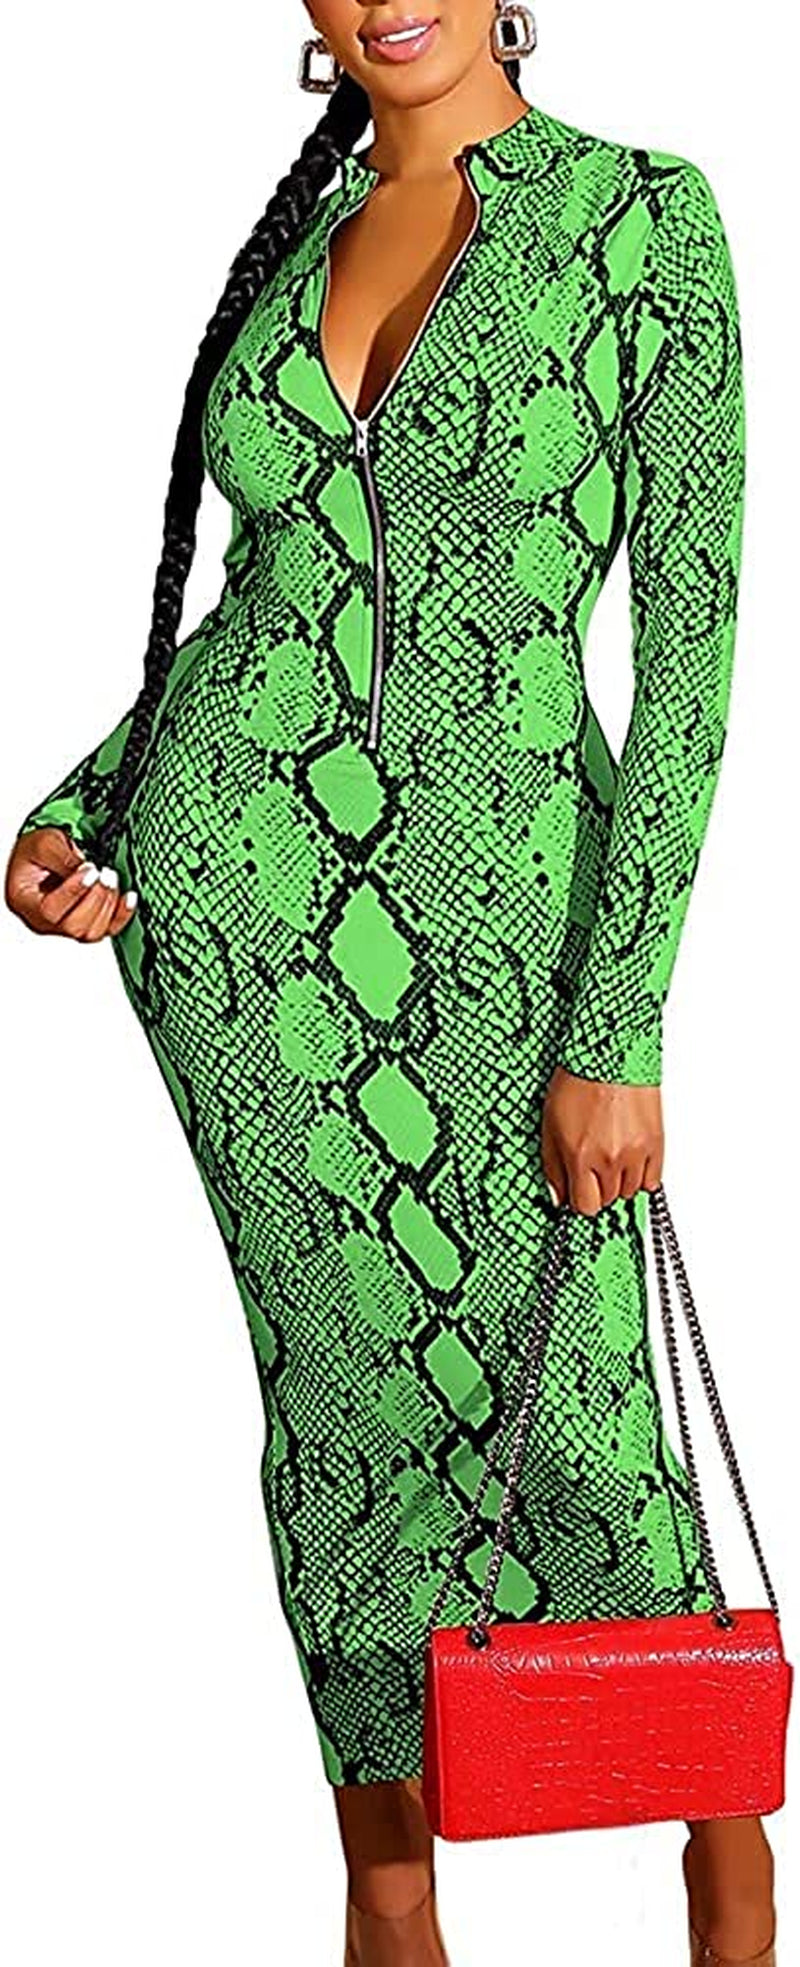 Xuan2Xuan3 Women'S Dresses Fall Long Sleeve Snake Printed Zipper Neck Knit Bodycon Evening Party Long Dress